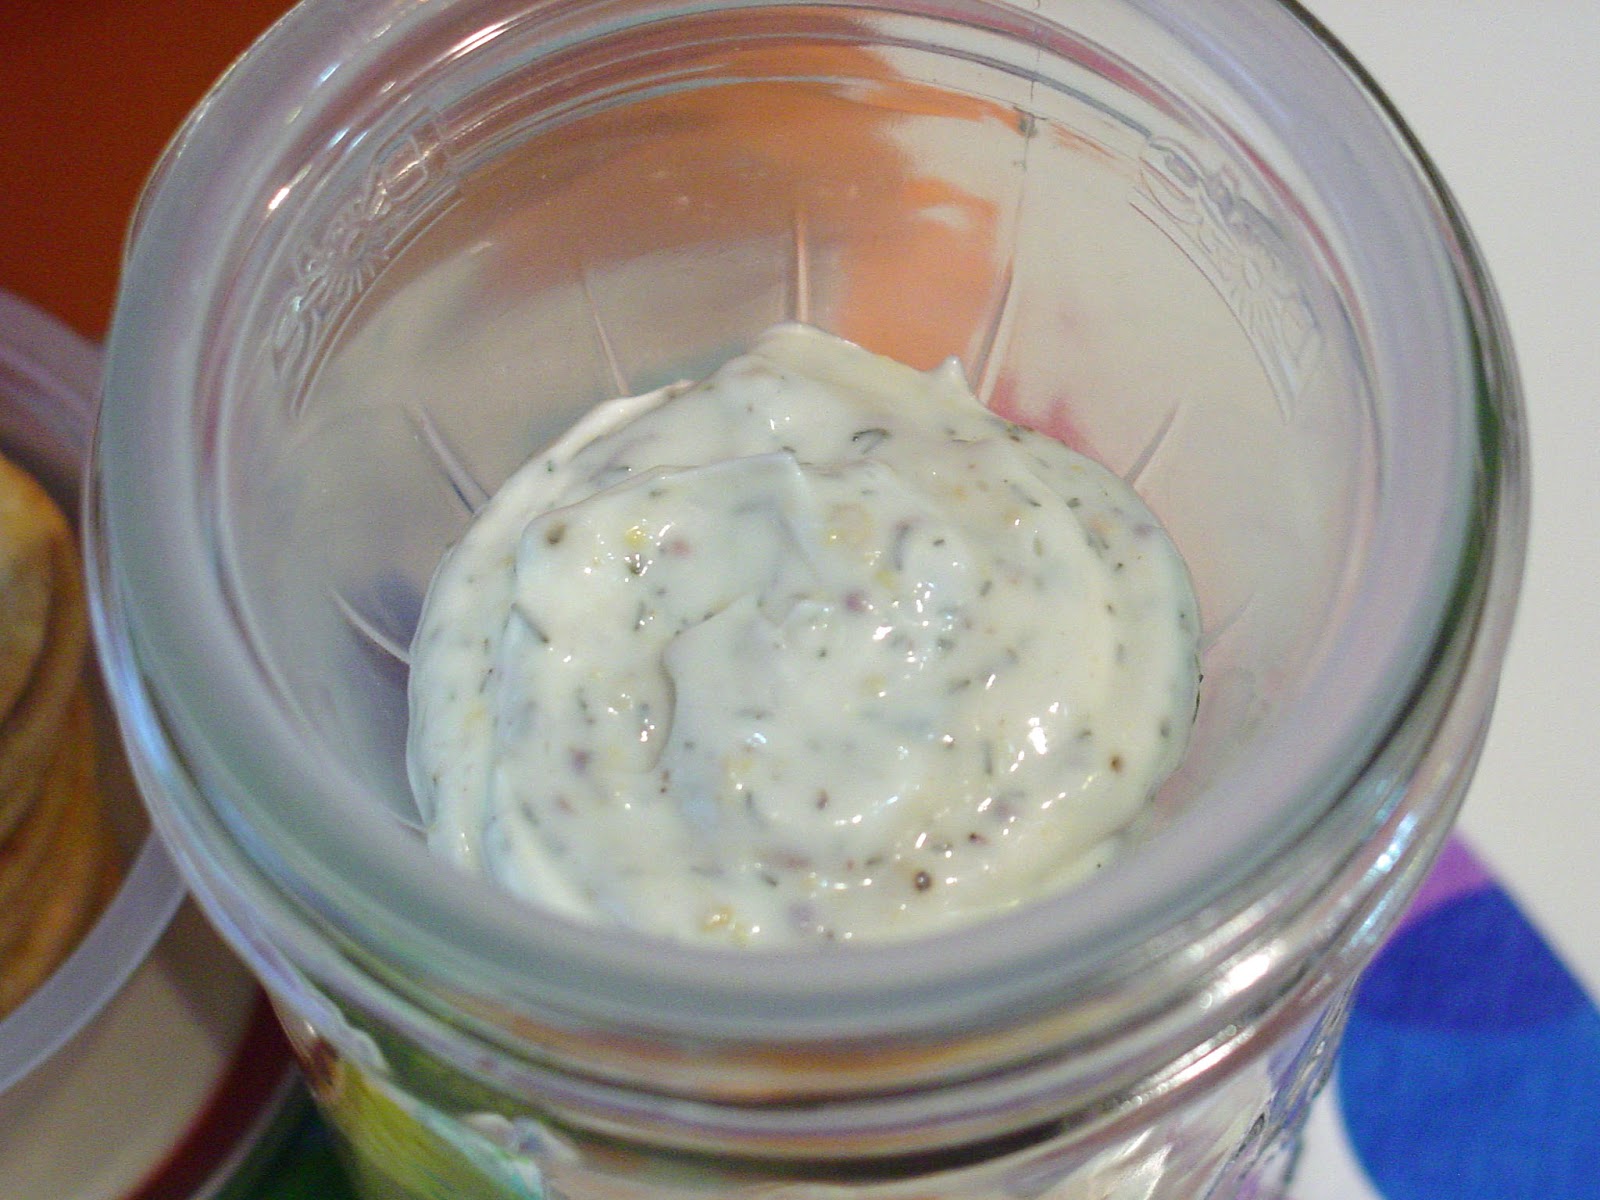 Mason Jar Divider Cup for Salads, Dips, and Snacks Ultra Violet / Regular Mouth